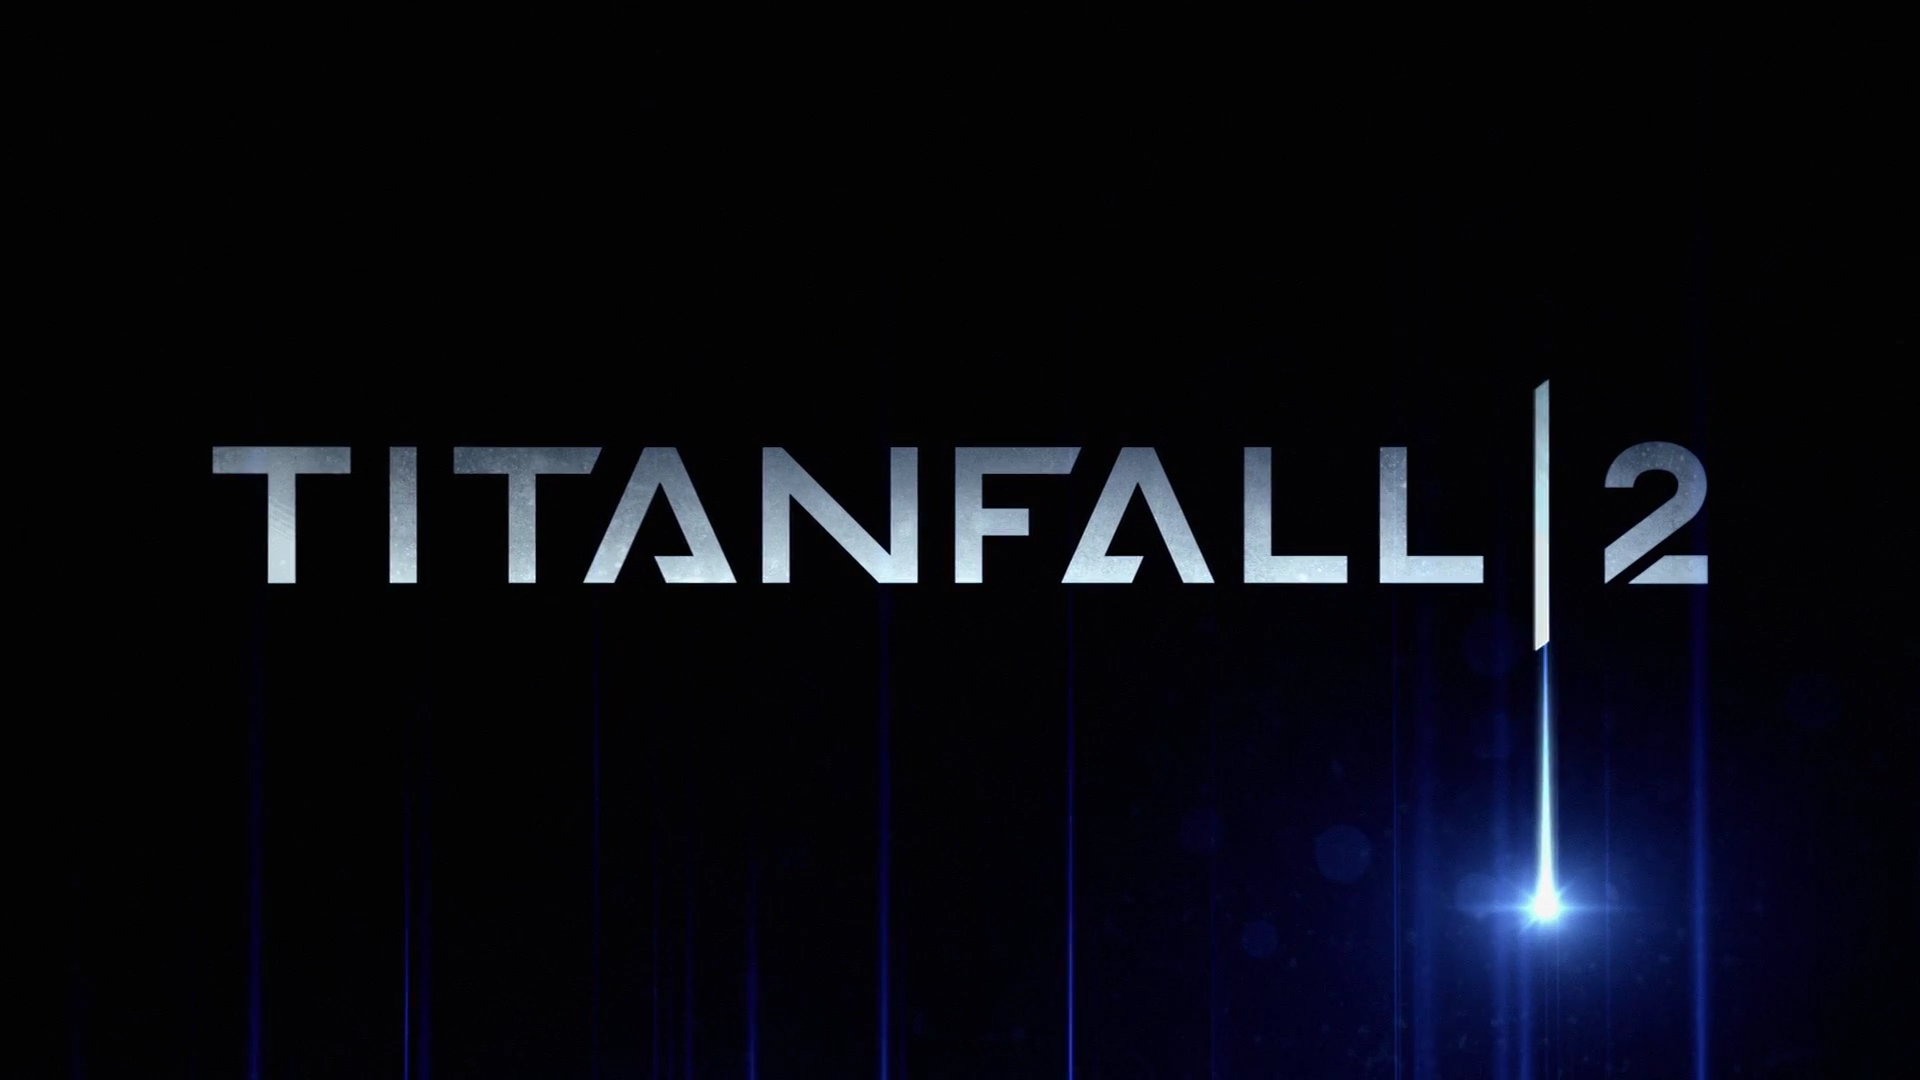 Titanfall 2 Hd Wallpaper Background Image 1920x1080 Id716179